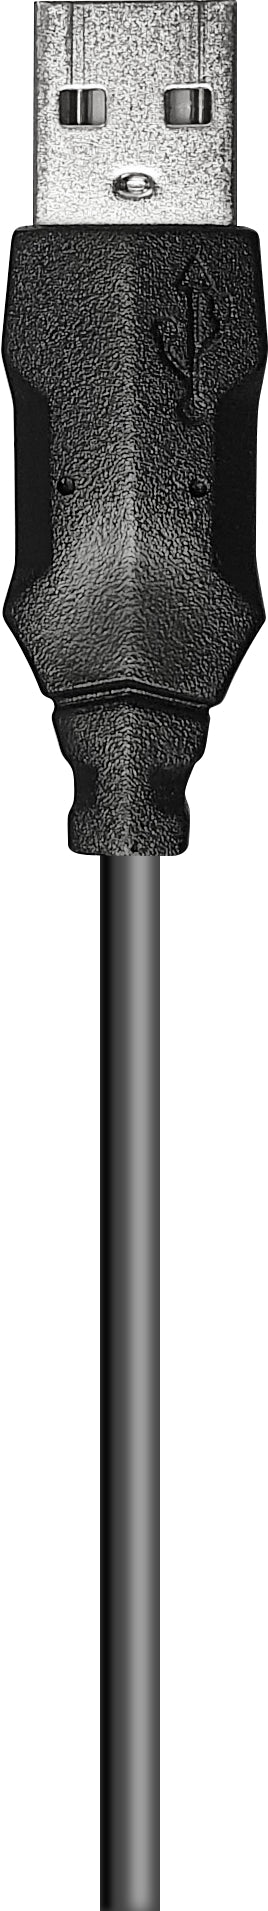 Speedlink EXCELLO Illuminated Headset Stand, 3-Port USB 2.0 Hub